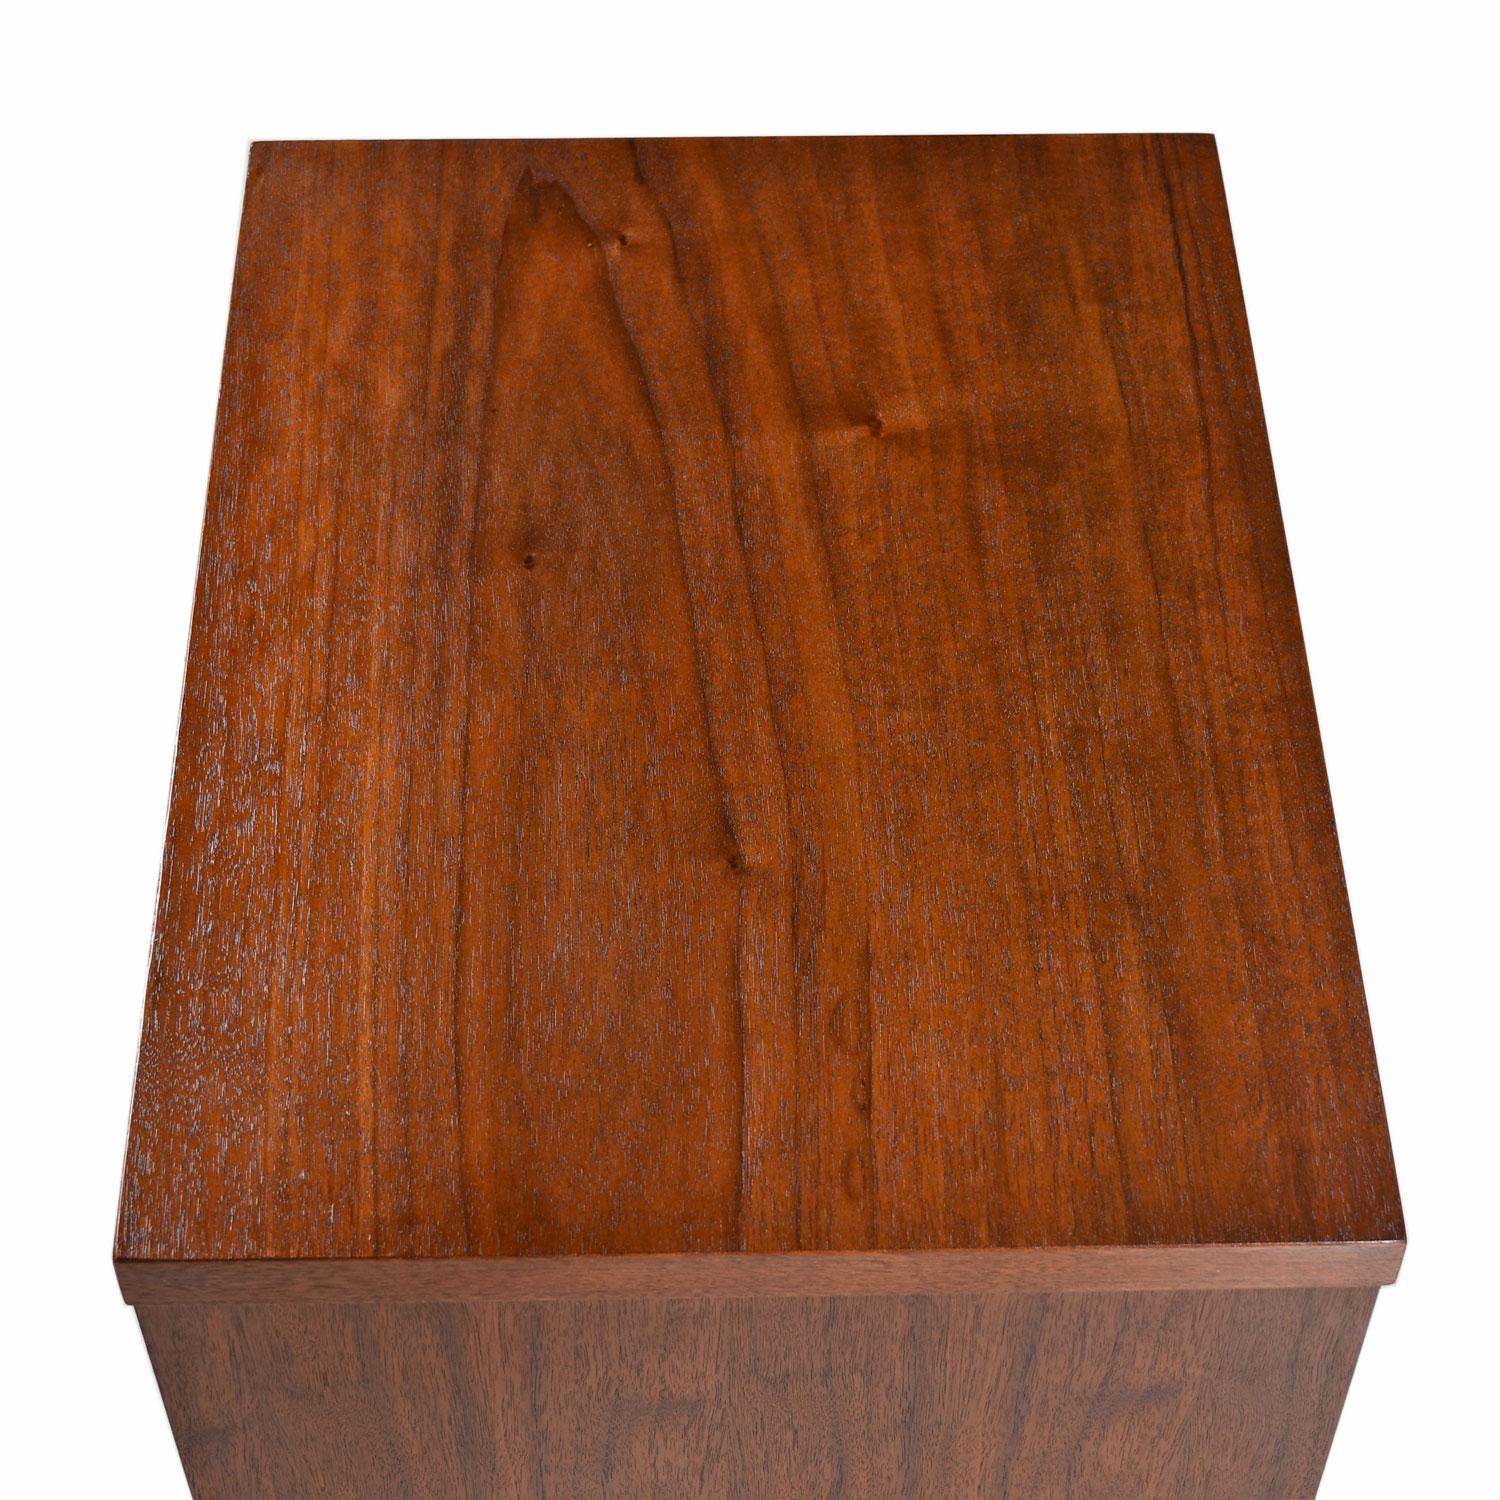 American Mid-Century Modern Oak and Walnut Nightstand Bedside Tables by Kroehler